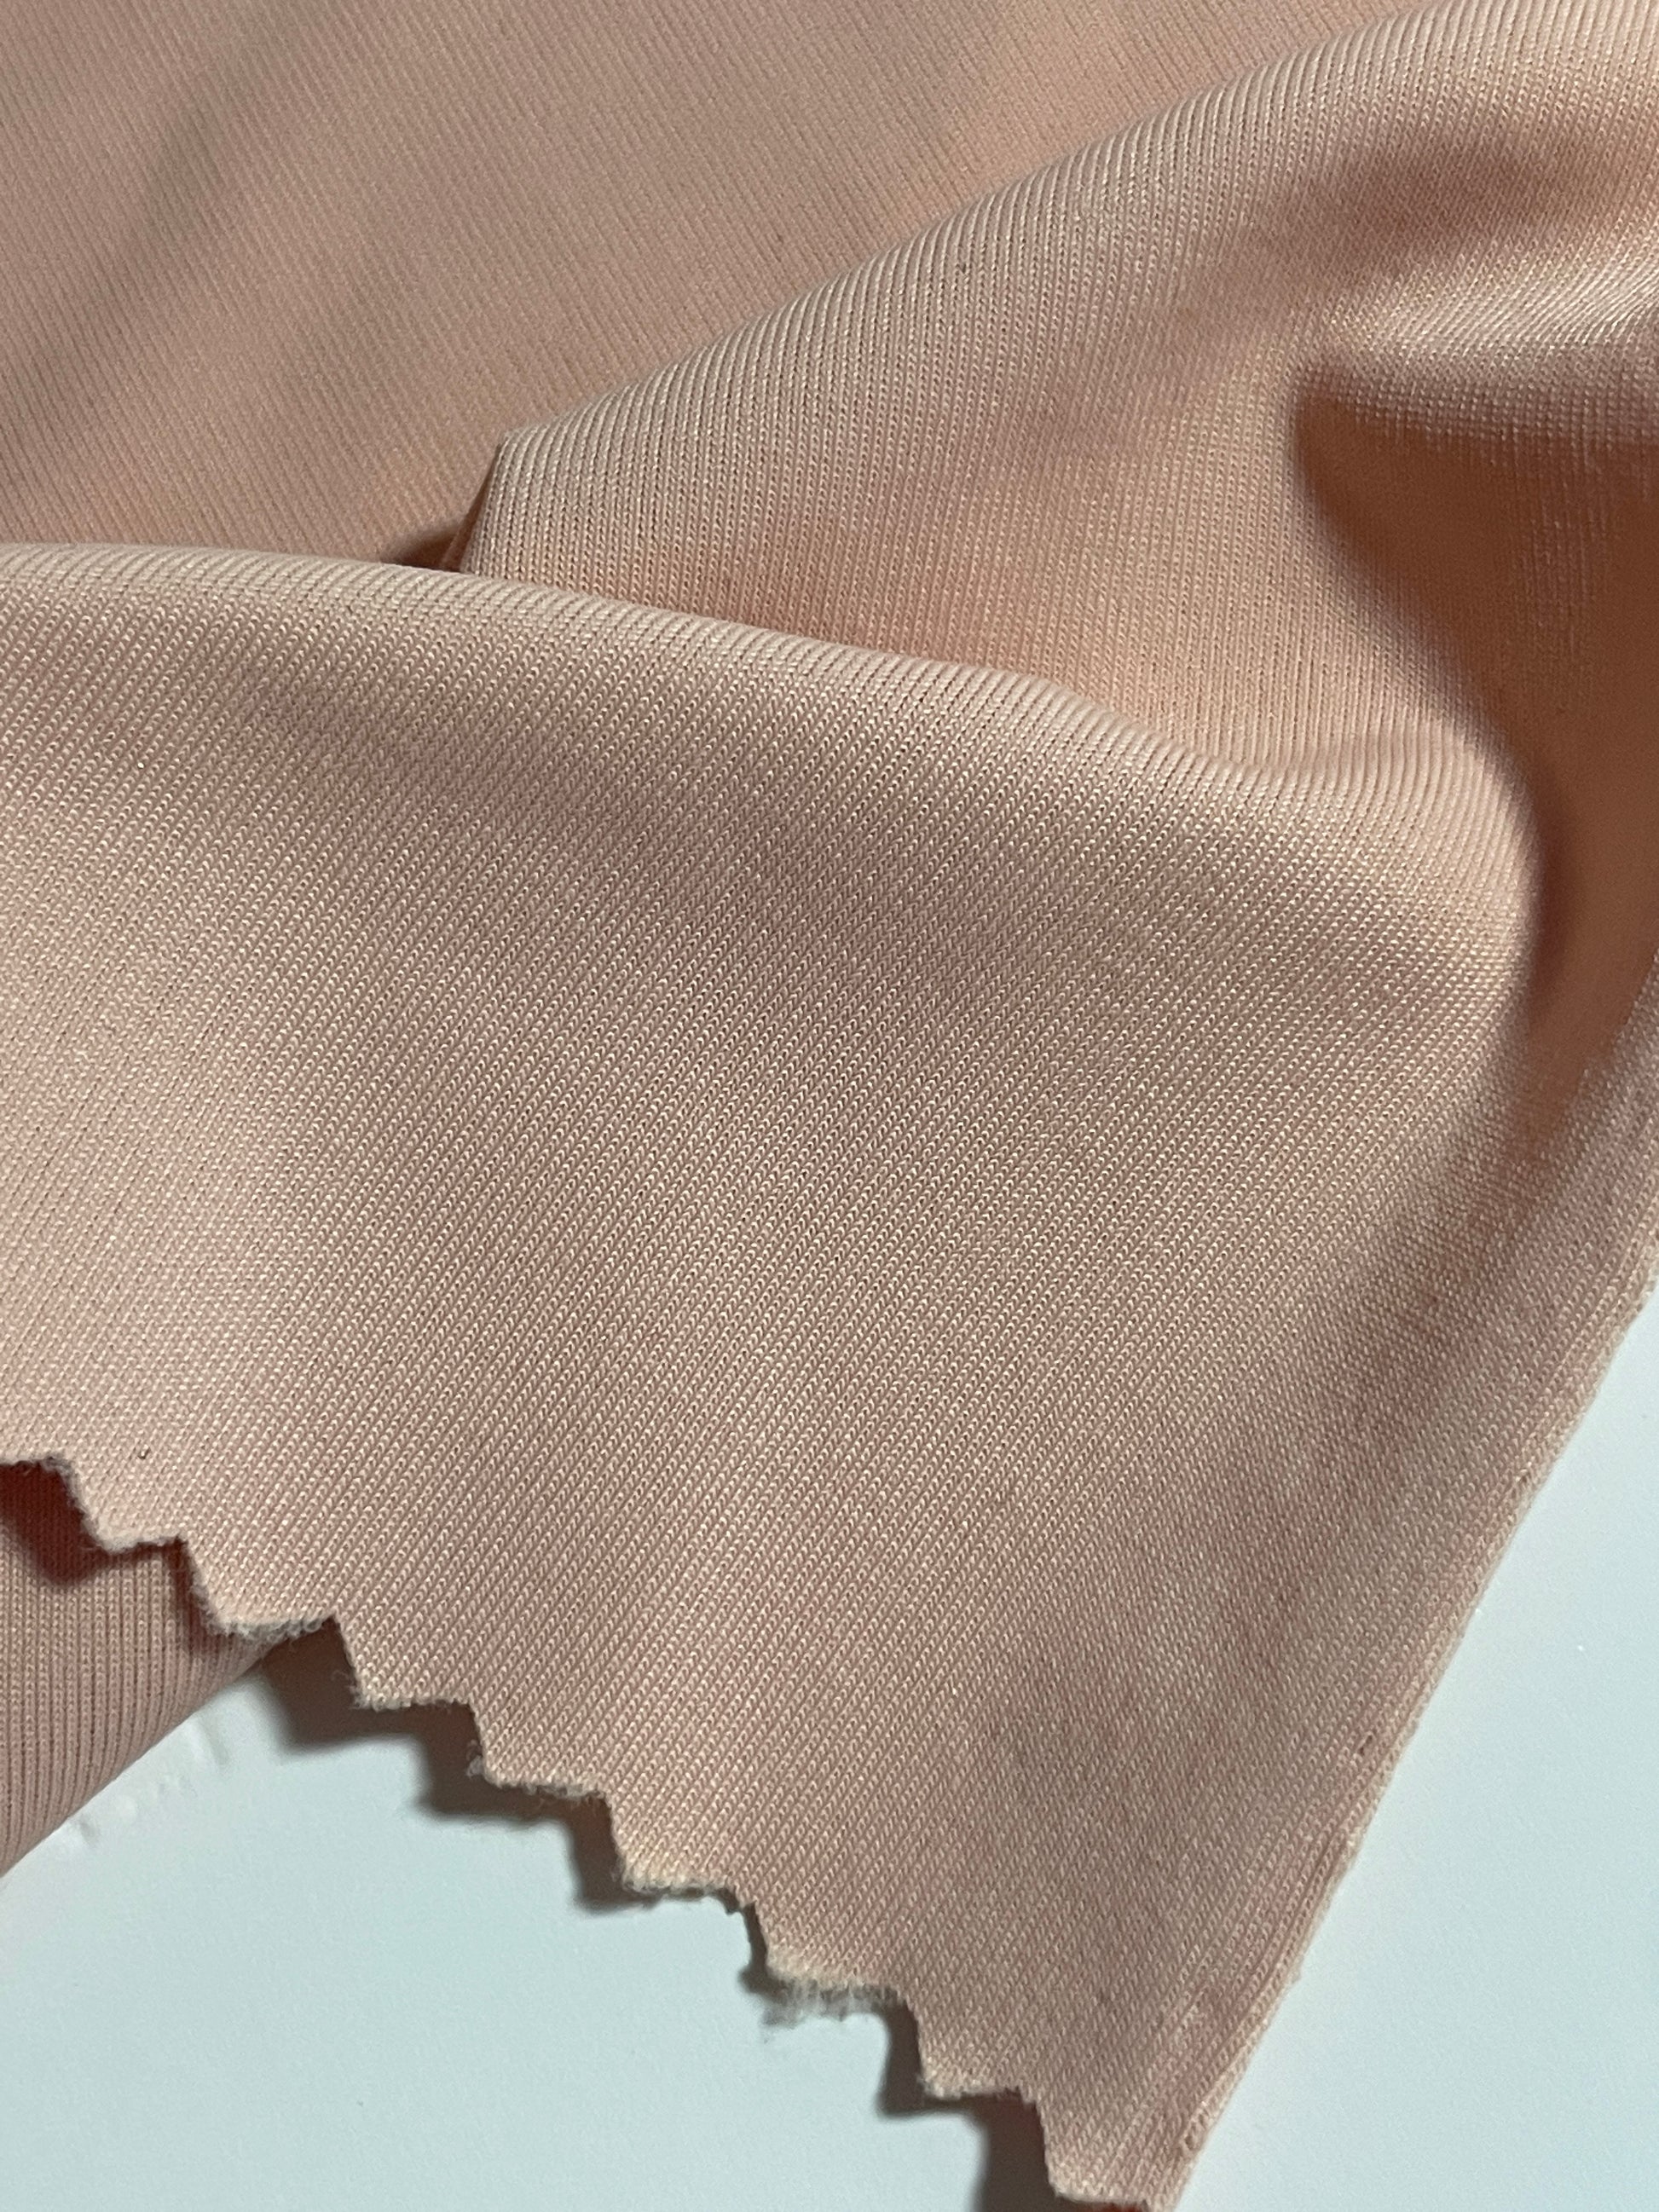 UV protection 50+ Active Wear Functional Fabric--Matt & Soft - Natasha Fabric